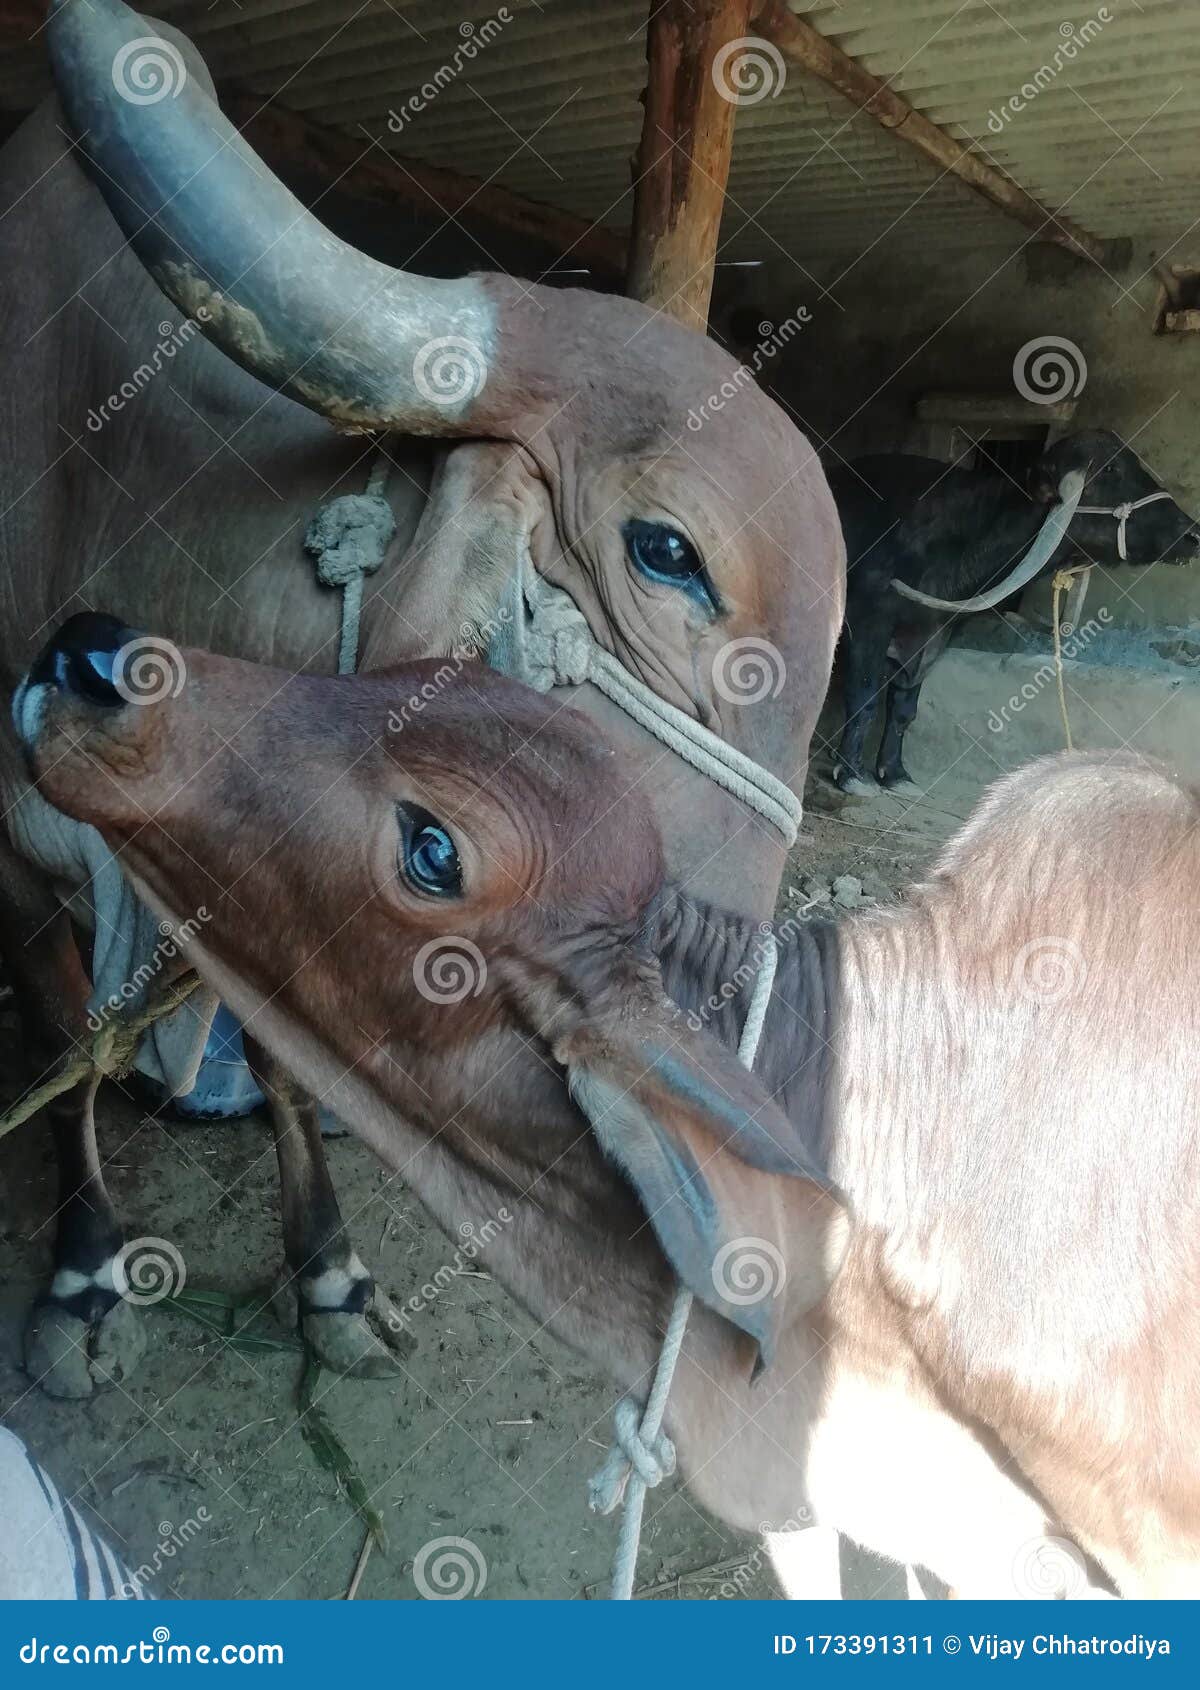 gir cow and caf animal so beautiful mothar love in sun of cow